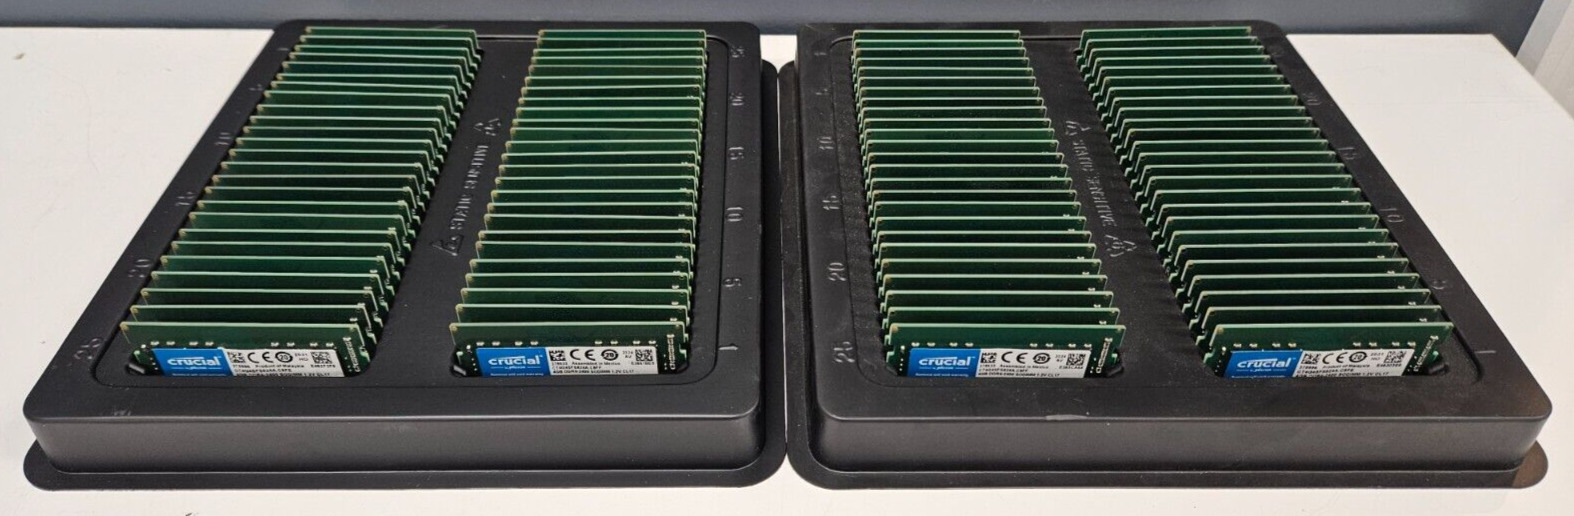 Lot of 100 Crucial 4GB PC4-2400 Laptop RAM Sticks - Benefits Charity